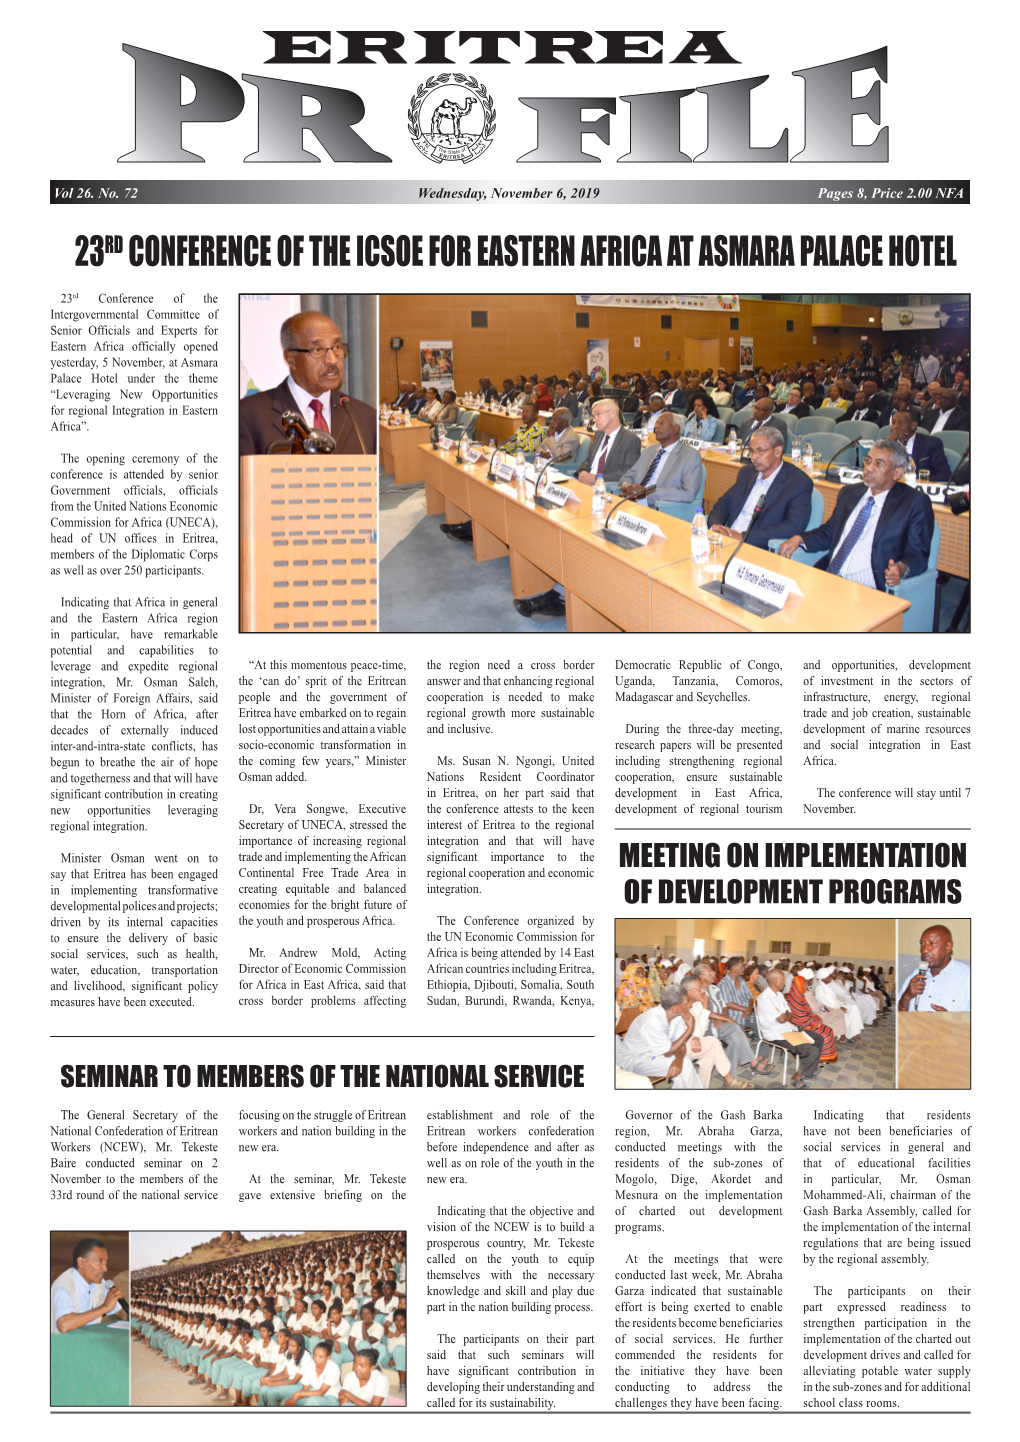 Eritrea Profile, Wednesday, November 6, 2019 Vol